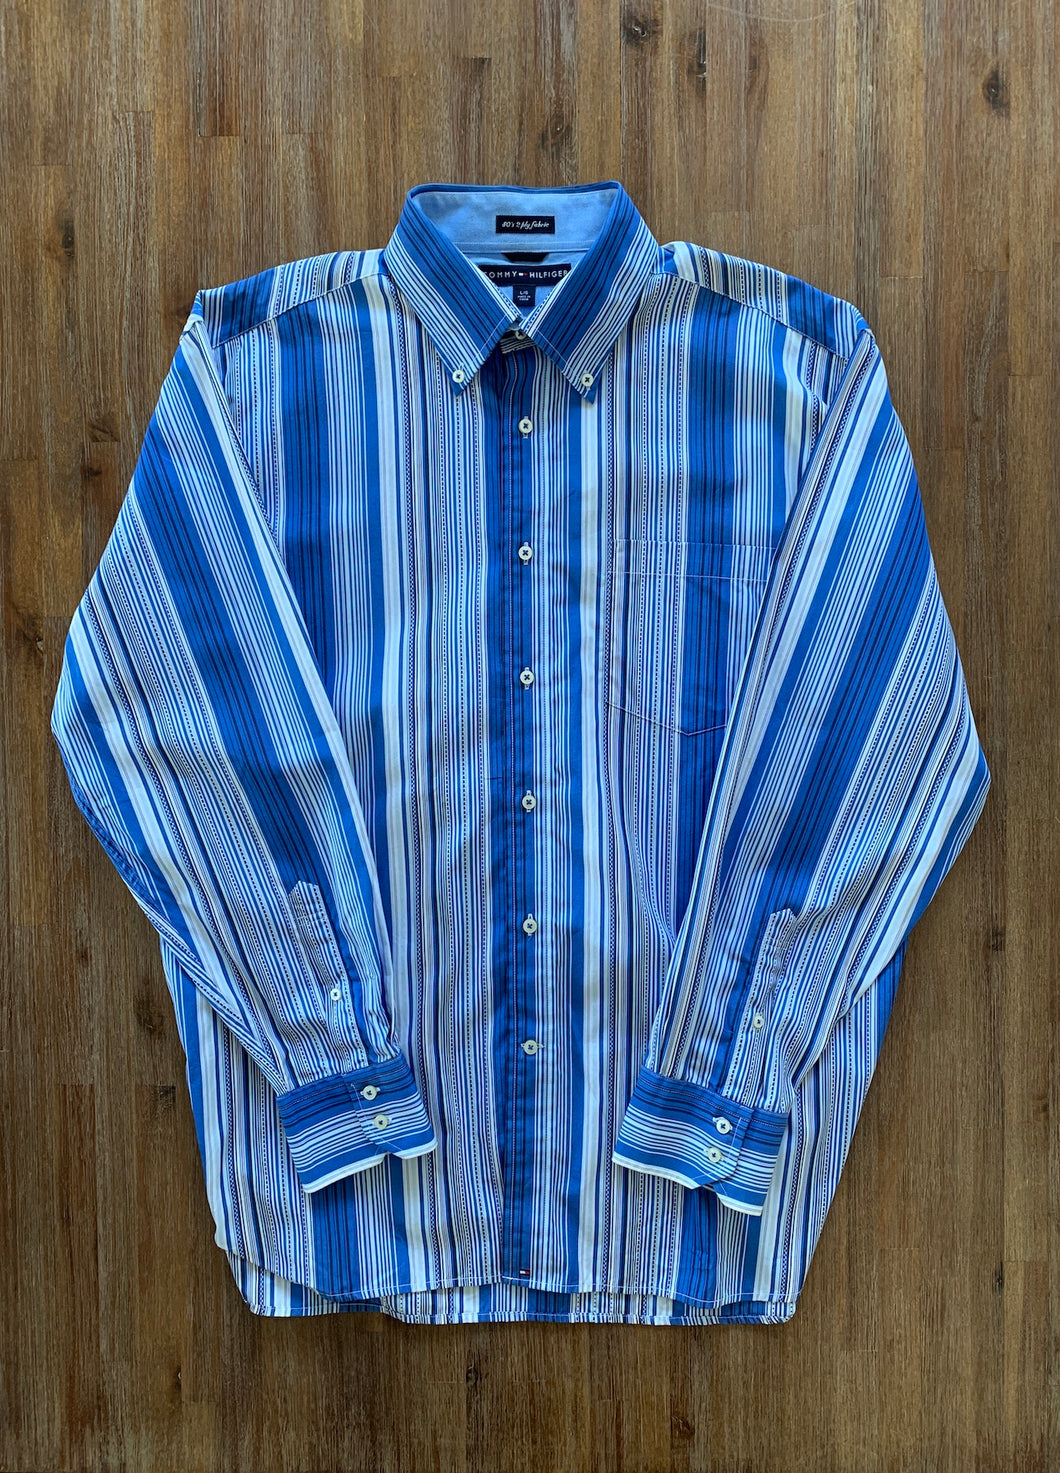 TOMMY HILFIGER Size L Retro 80's Ply Striped L/S Shirt Men's